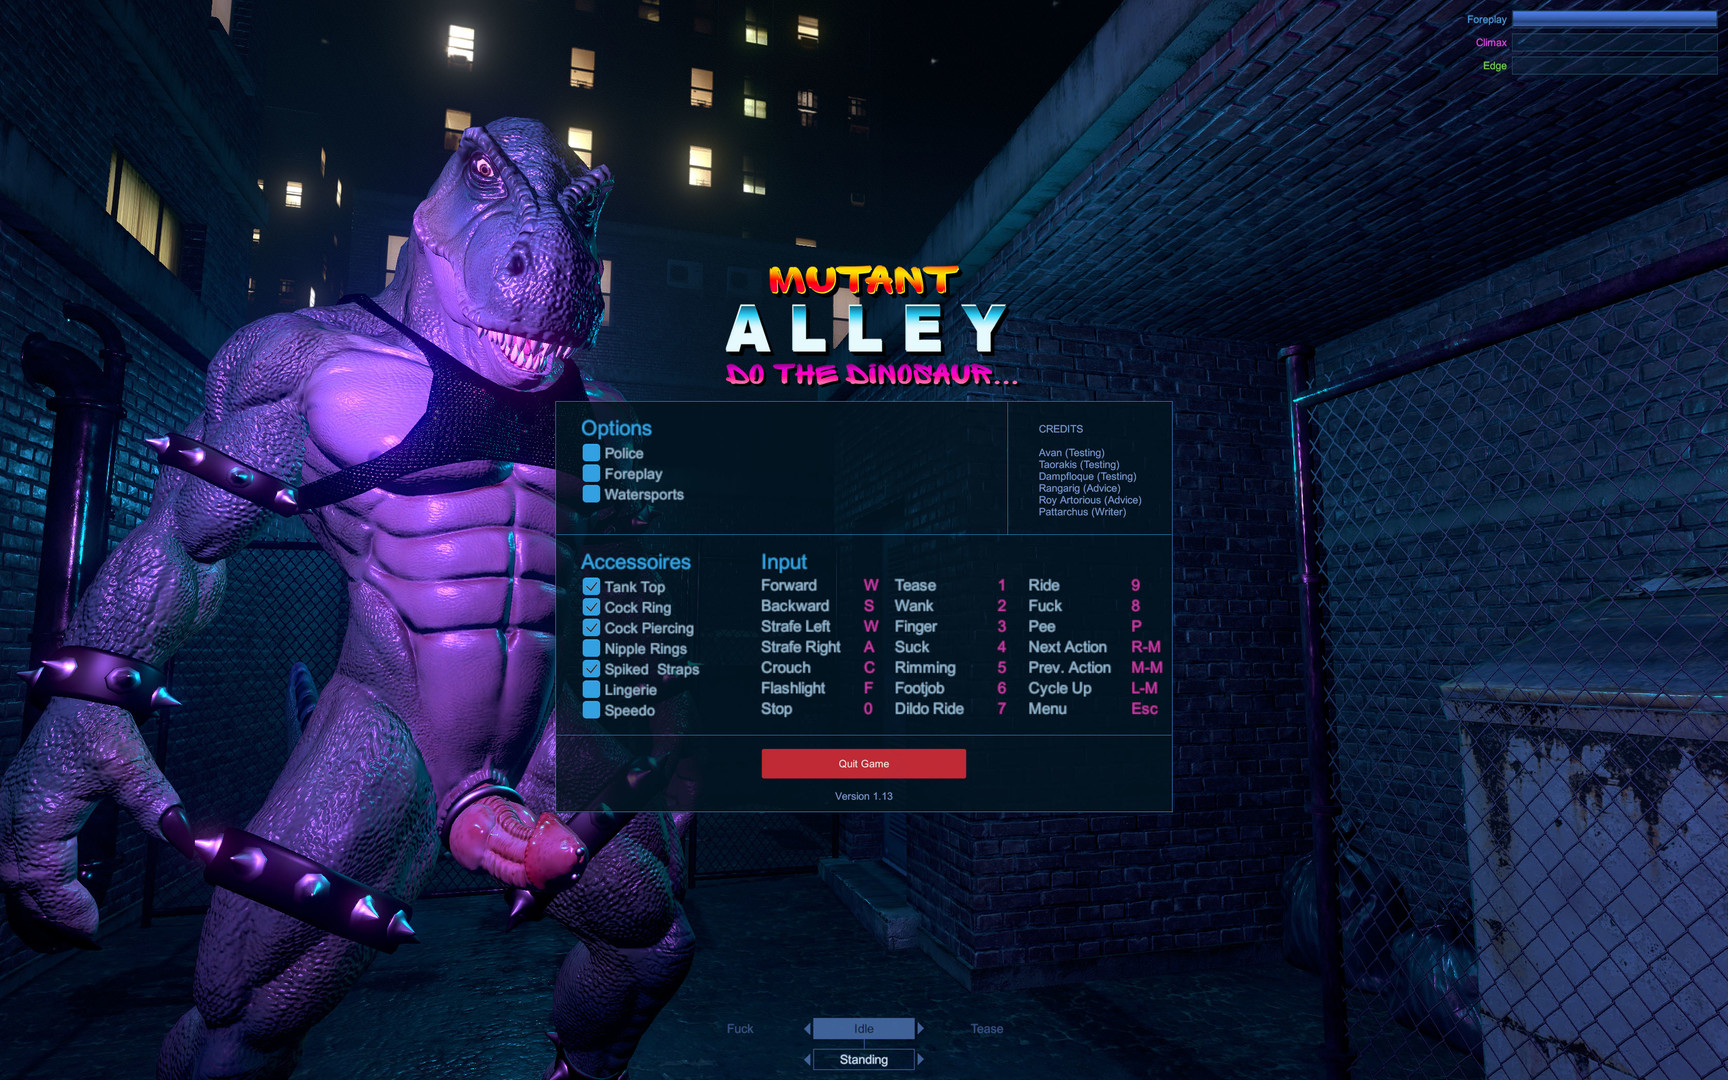 Mutant Alley: Do The Dinosaur on Steam